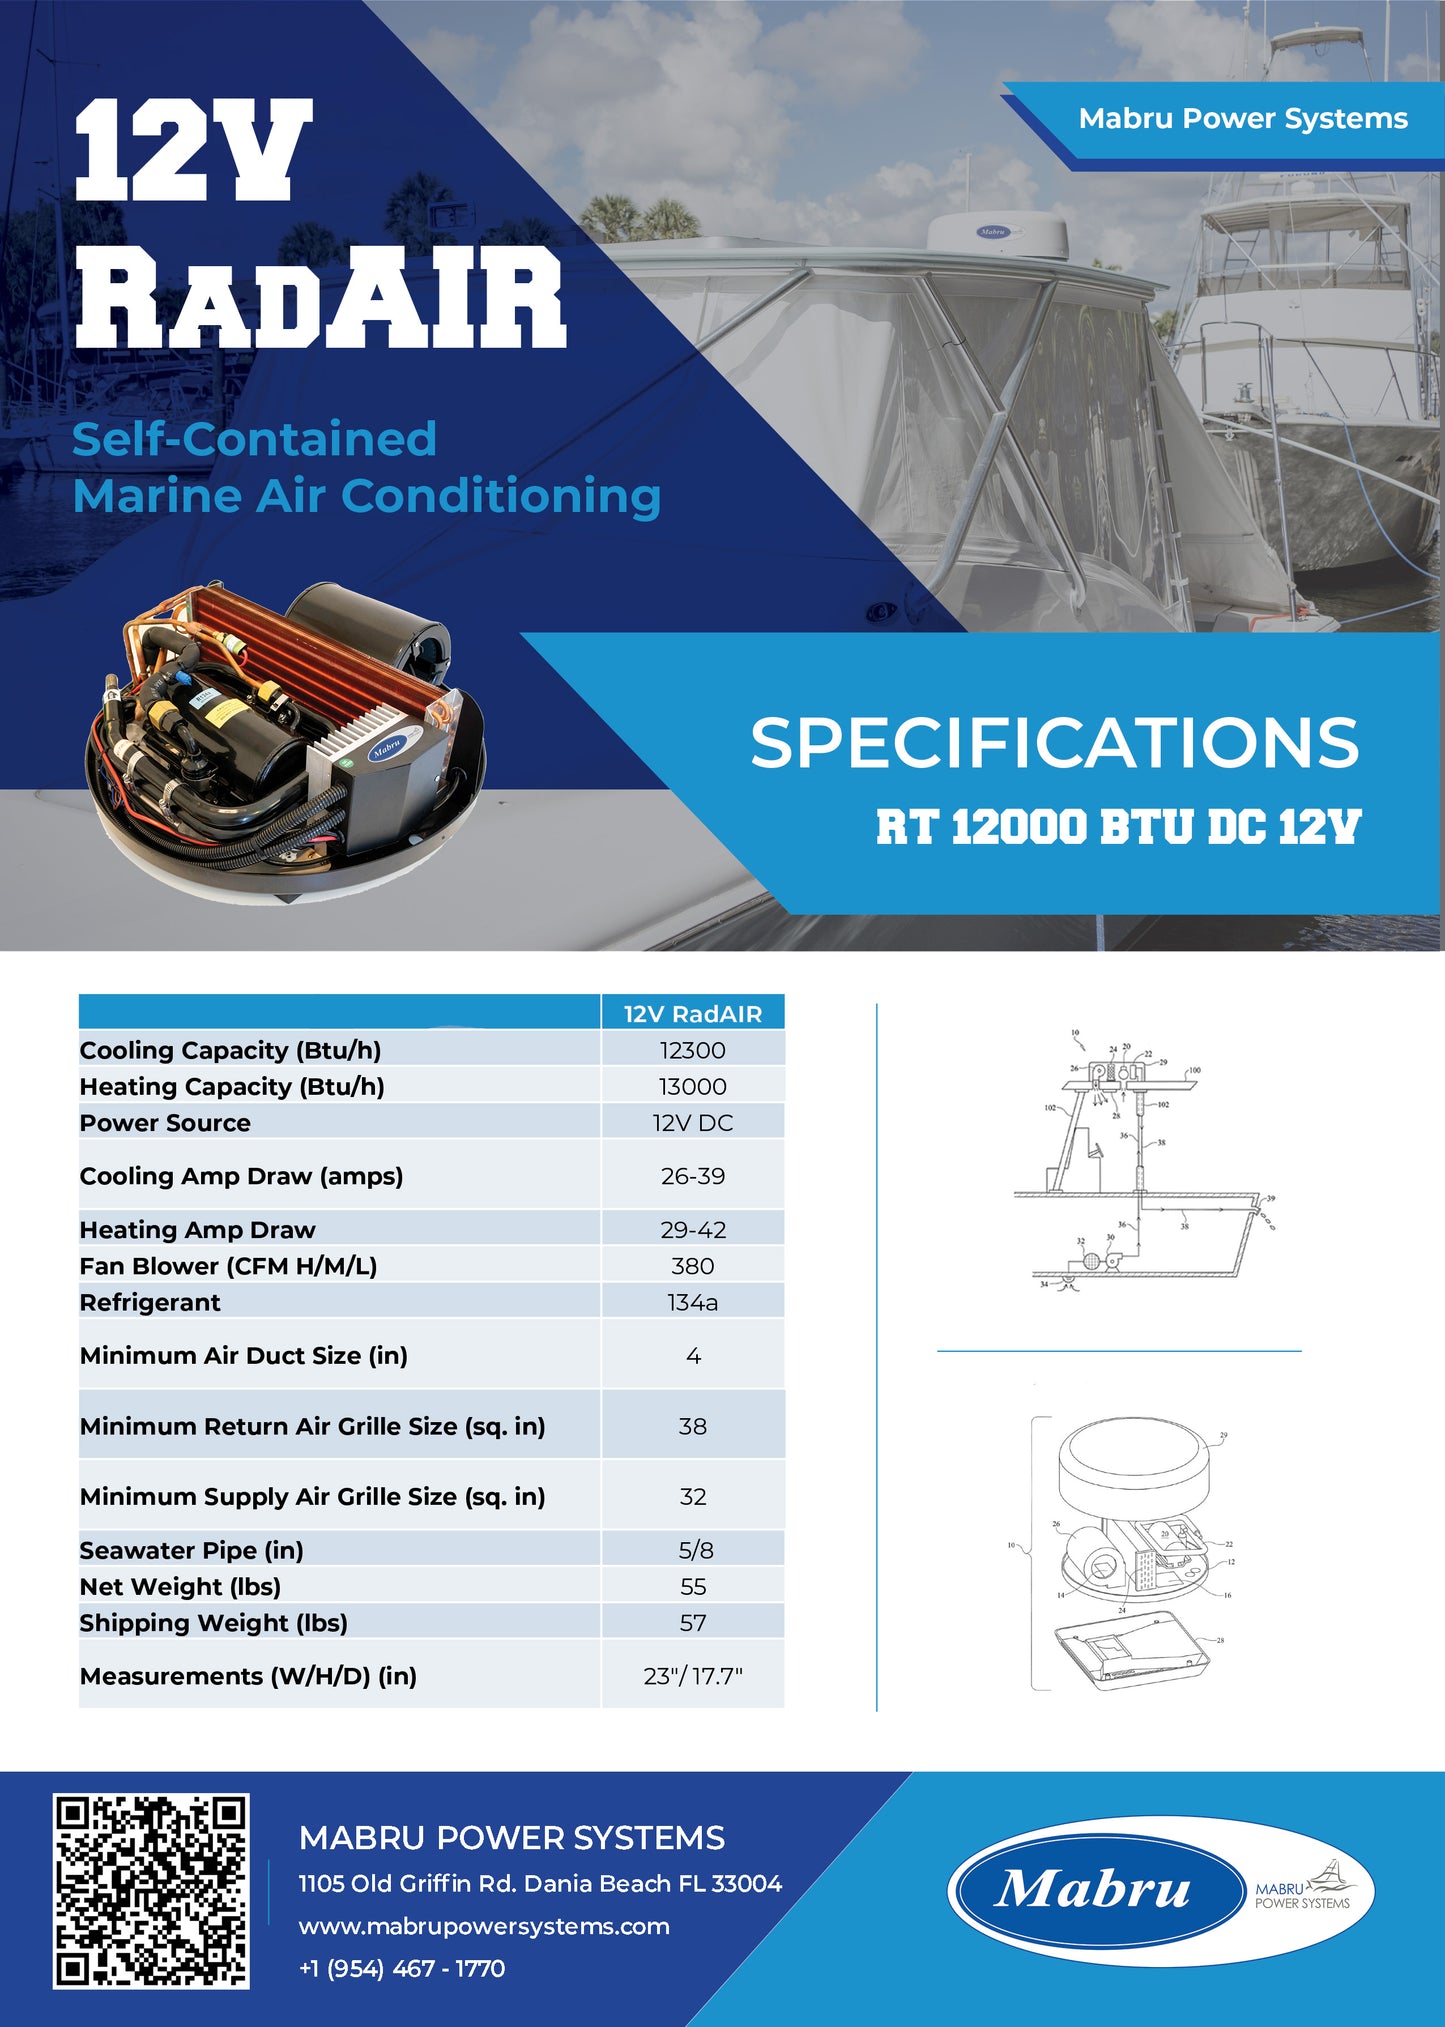 Mabru RadAIR 12k BTU 12V Air Conditioner   ITS NOT A RADAR! Experience air from above